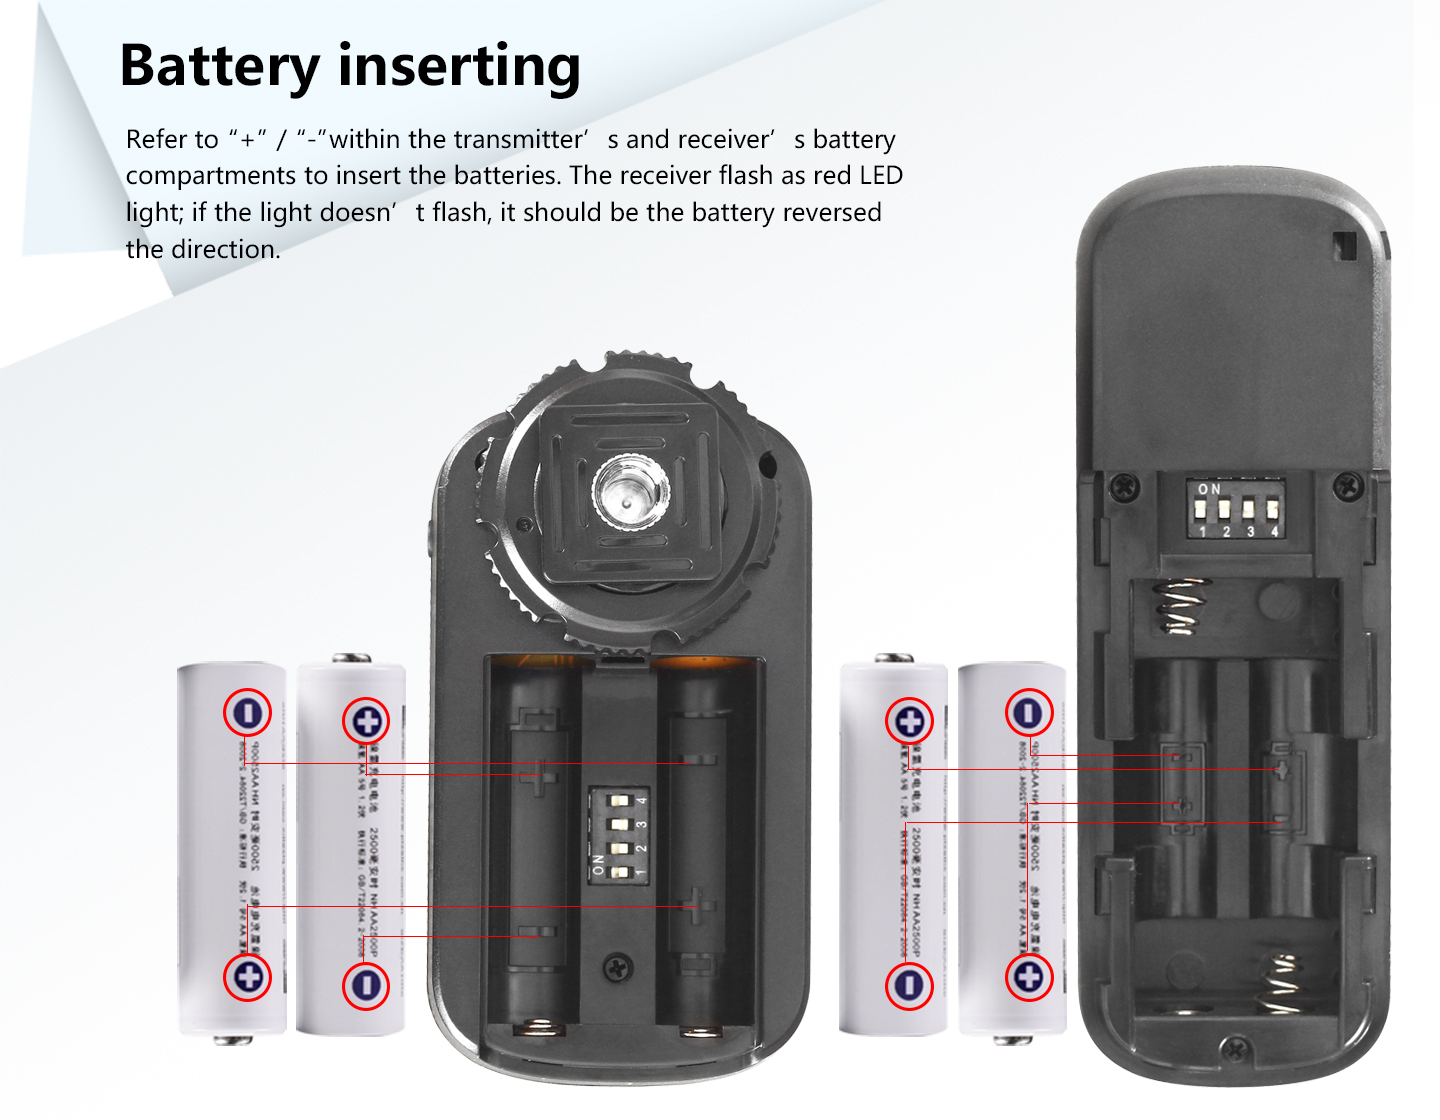 Battery inserting